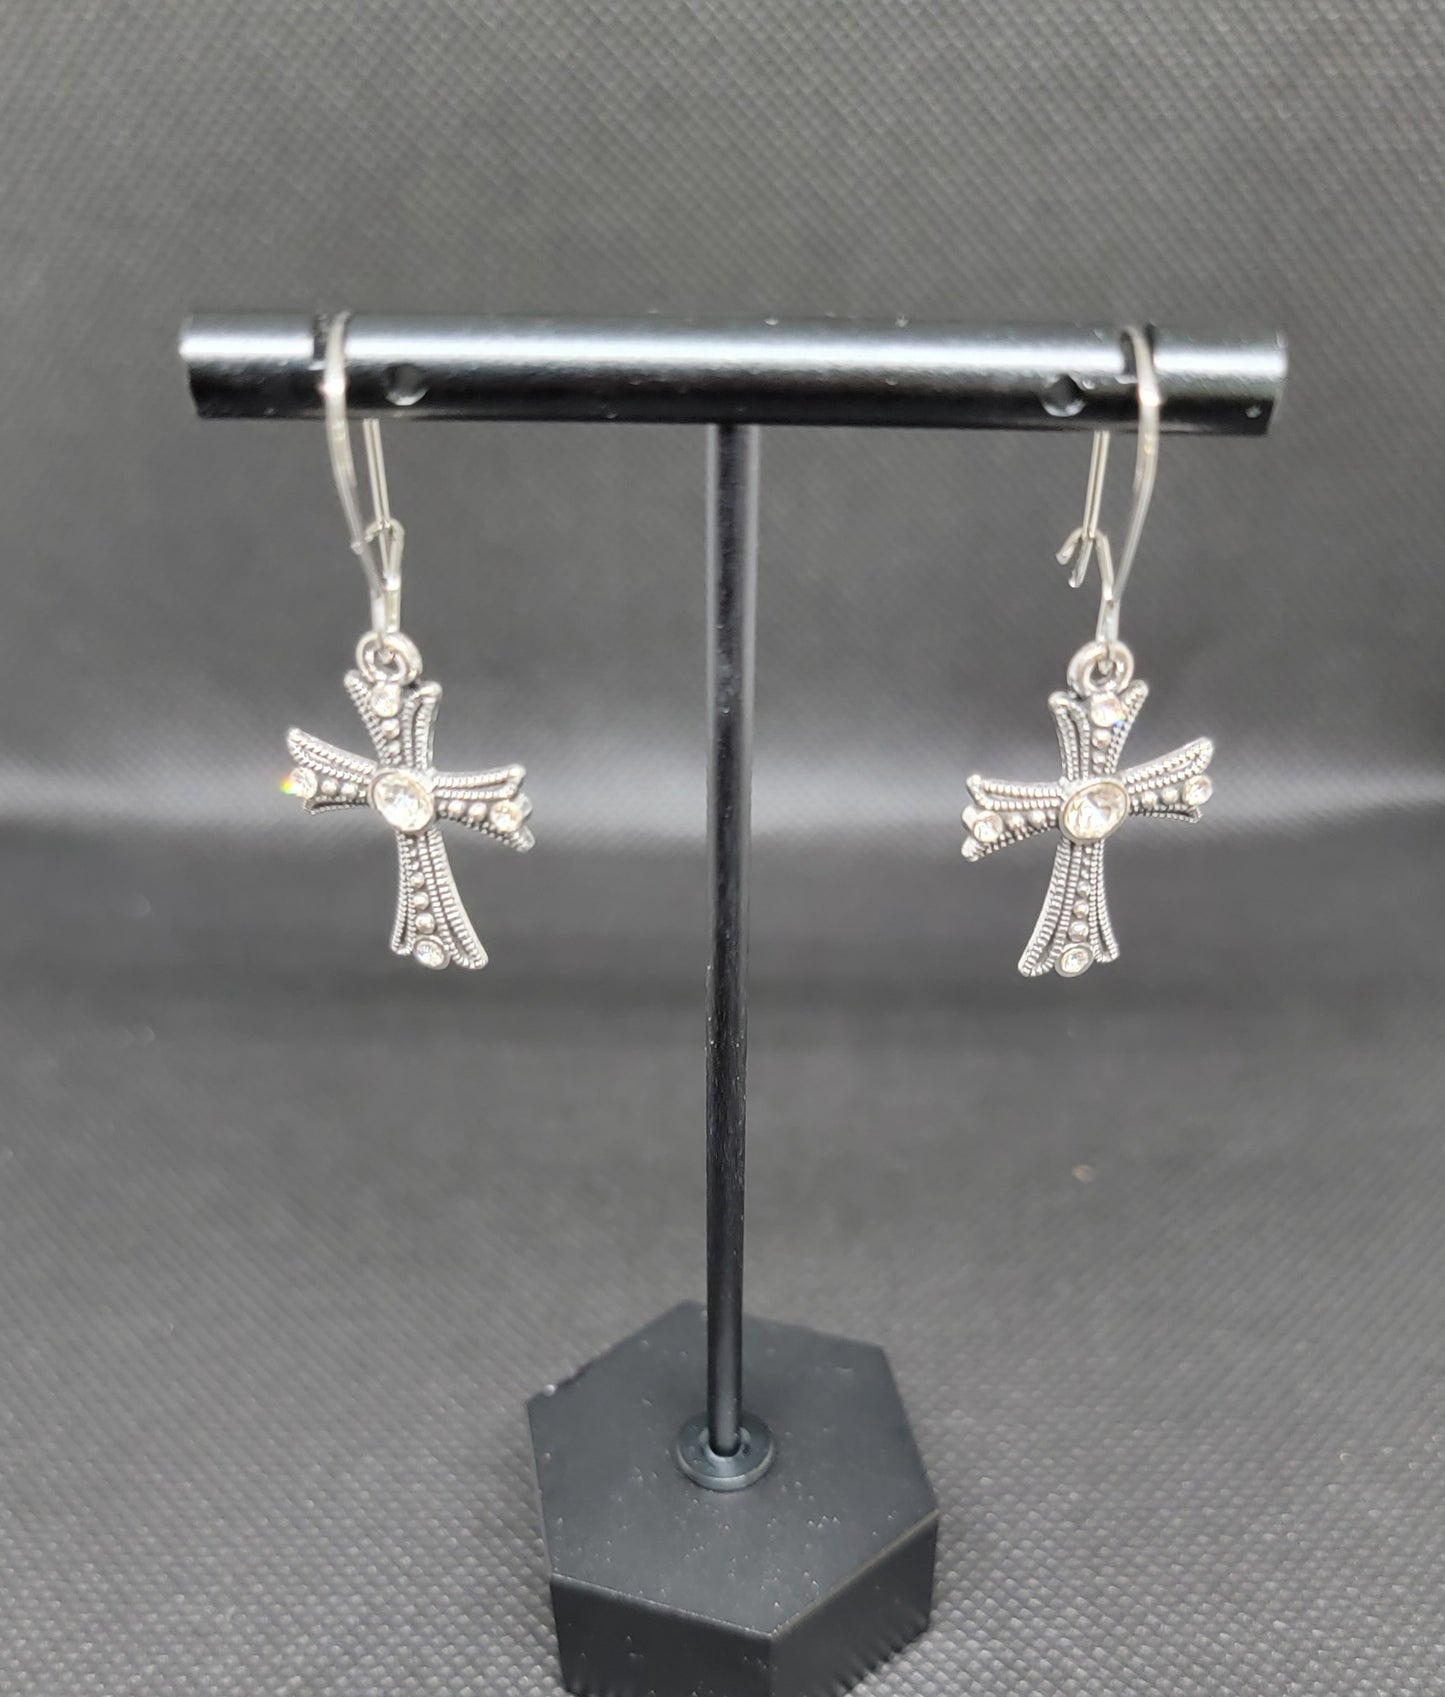 Silver cross earrings with rhinestones